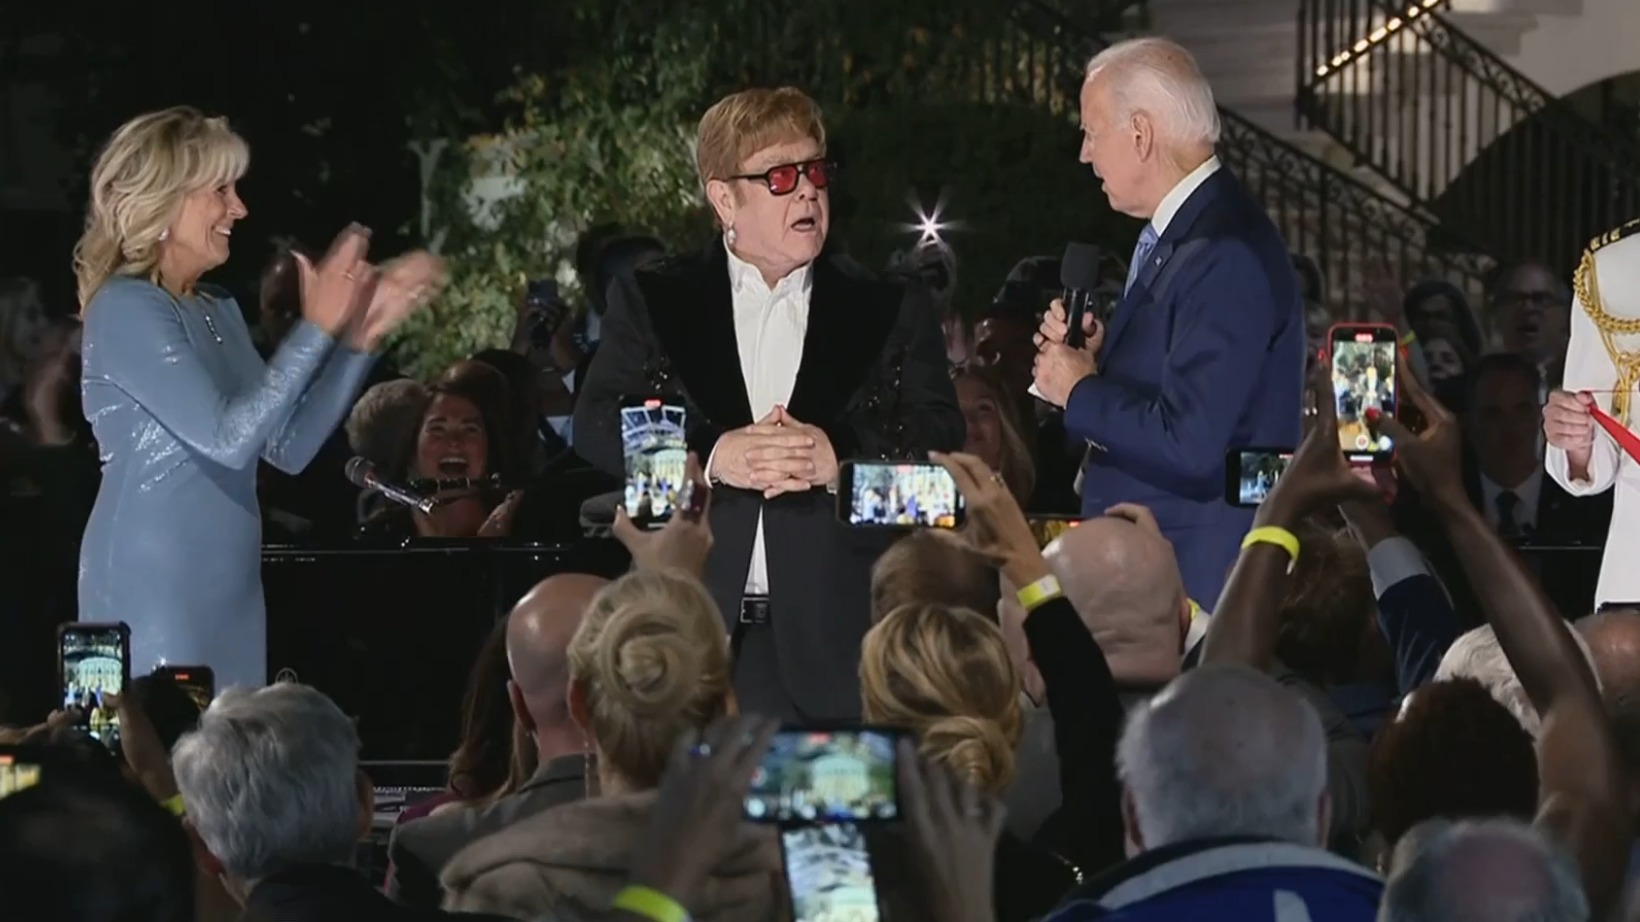 Sir Elton John Stunned As Joe Biden Awards Him Special Medal For His Work On Ending Aids Itv News 8955